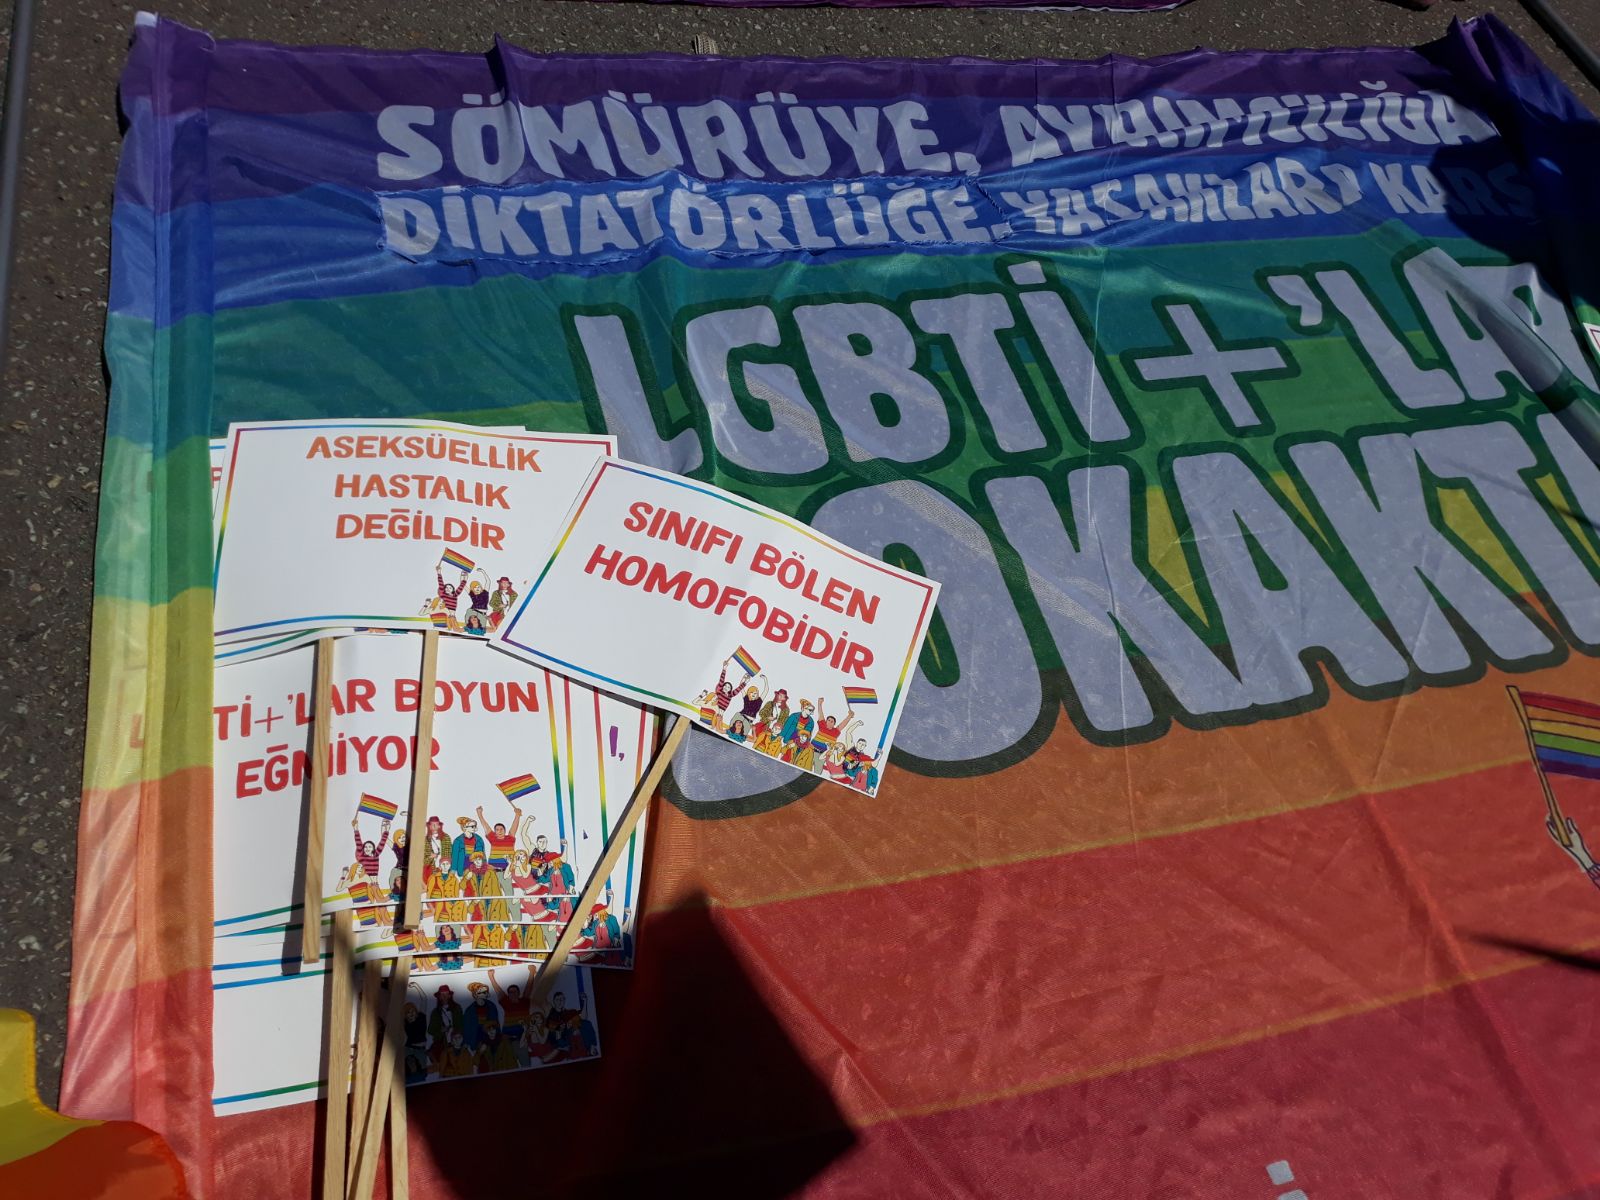 GALADER 1 Mayıs’a çağırıyor: Fobiye, nefrete, ayrımcılığa karşı 1 Mayıs’ta Alanlardayız! Kaos GL - LGBTİ+ Haber Portalı